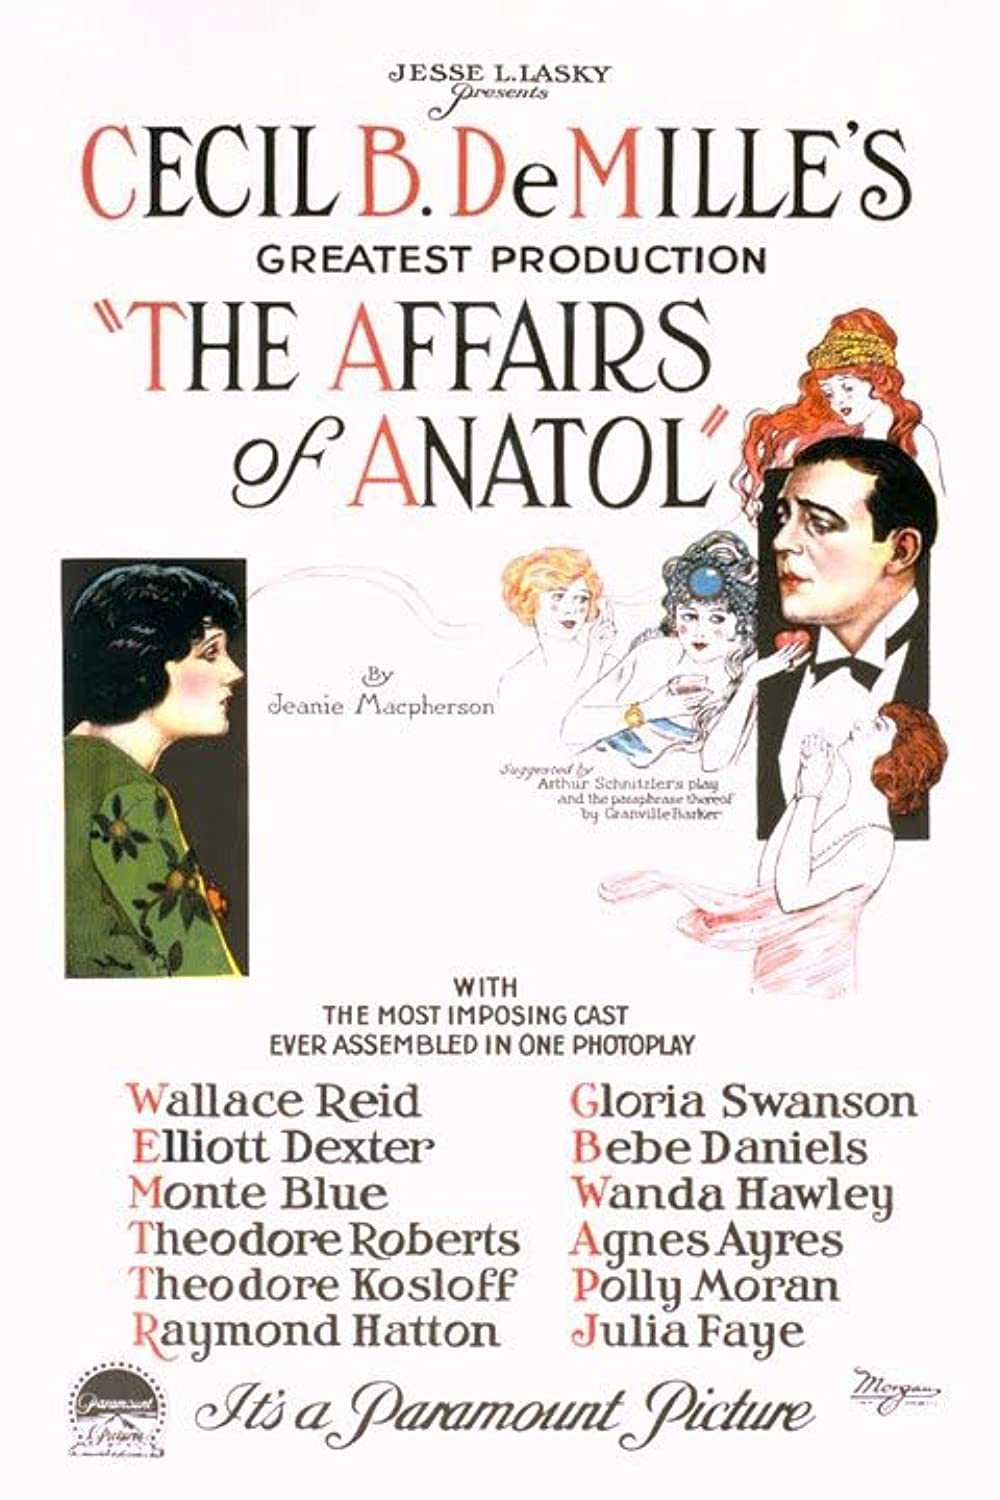 Filmbeschreibung zu The Affairs of Anatol